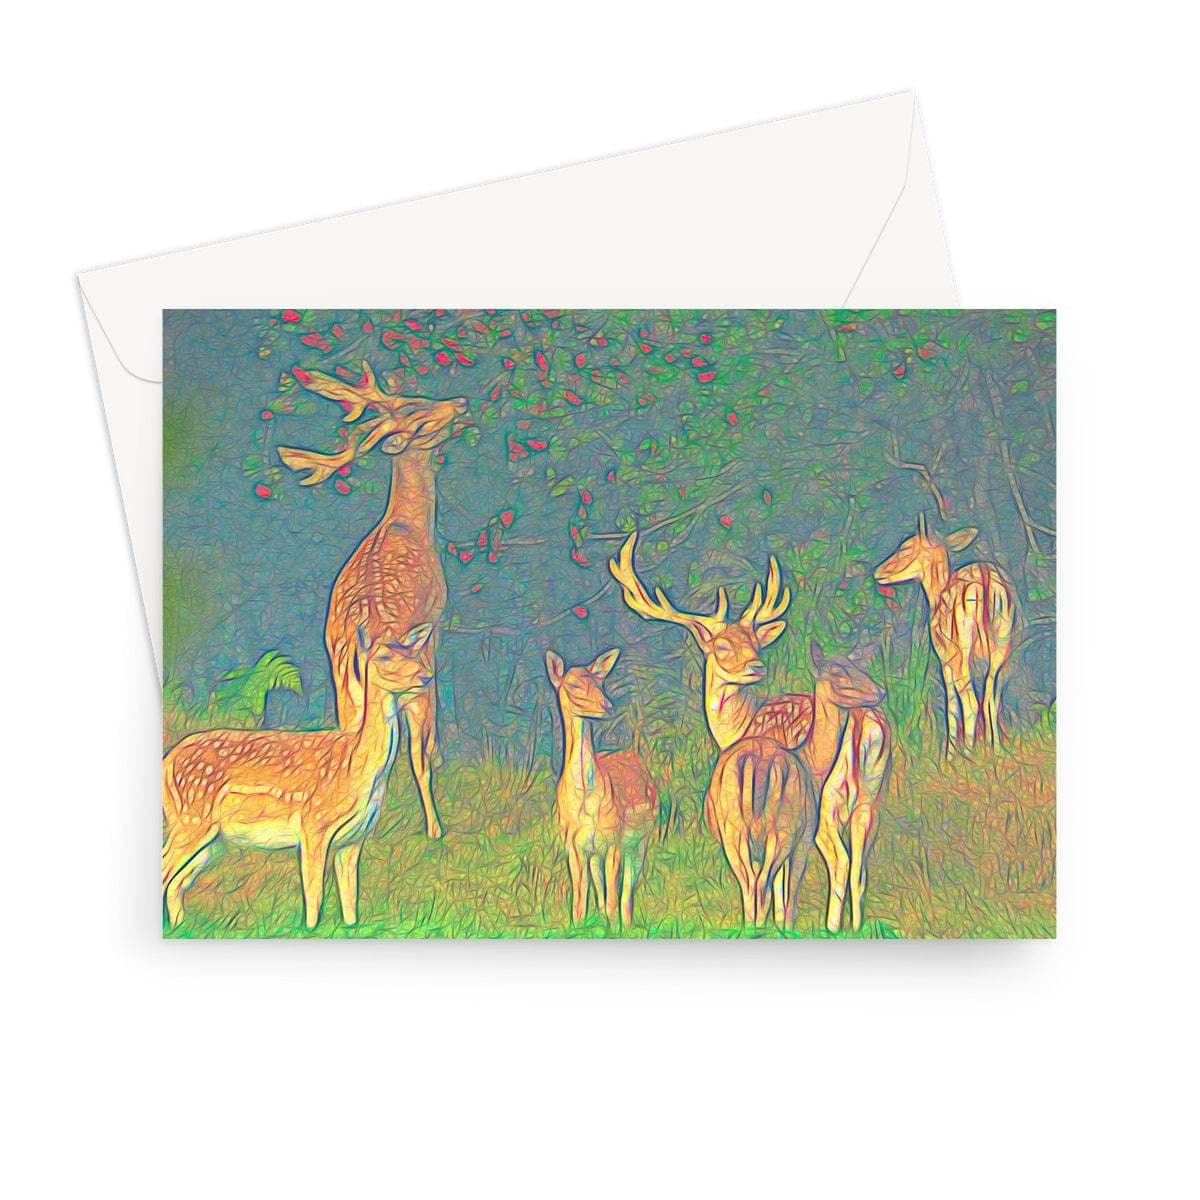 Deer pack in the forest, Greeting Card,by Ingrid Hütten